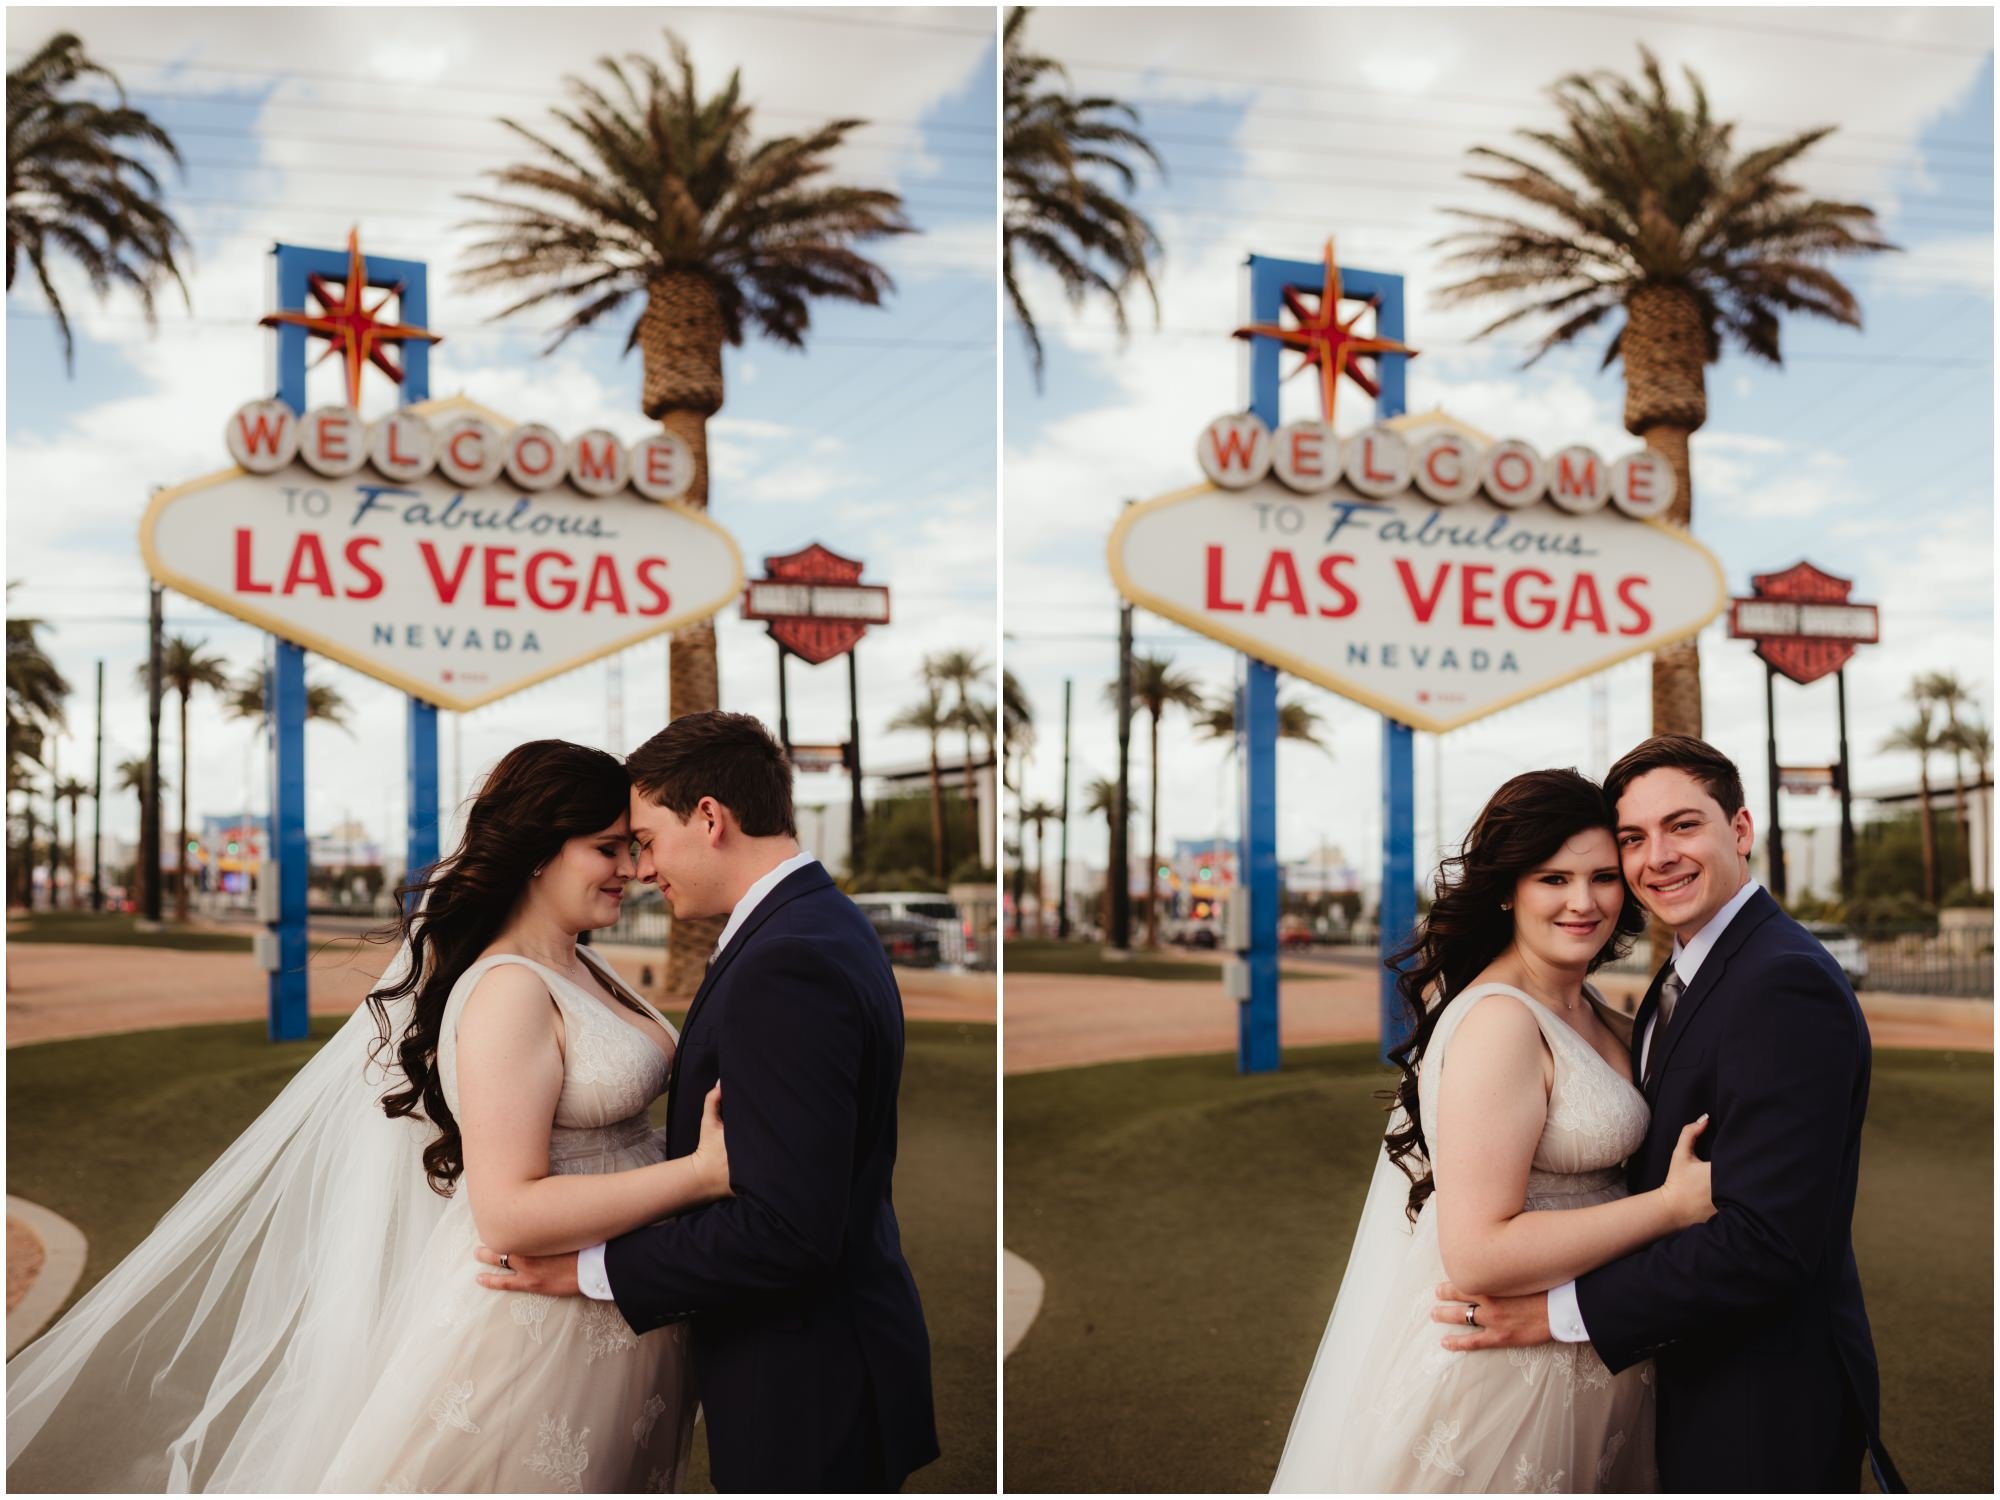 Las Vegas Full Day Elopement - Amber Garrett Photography - 034.JPG